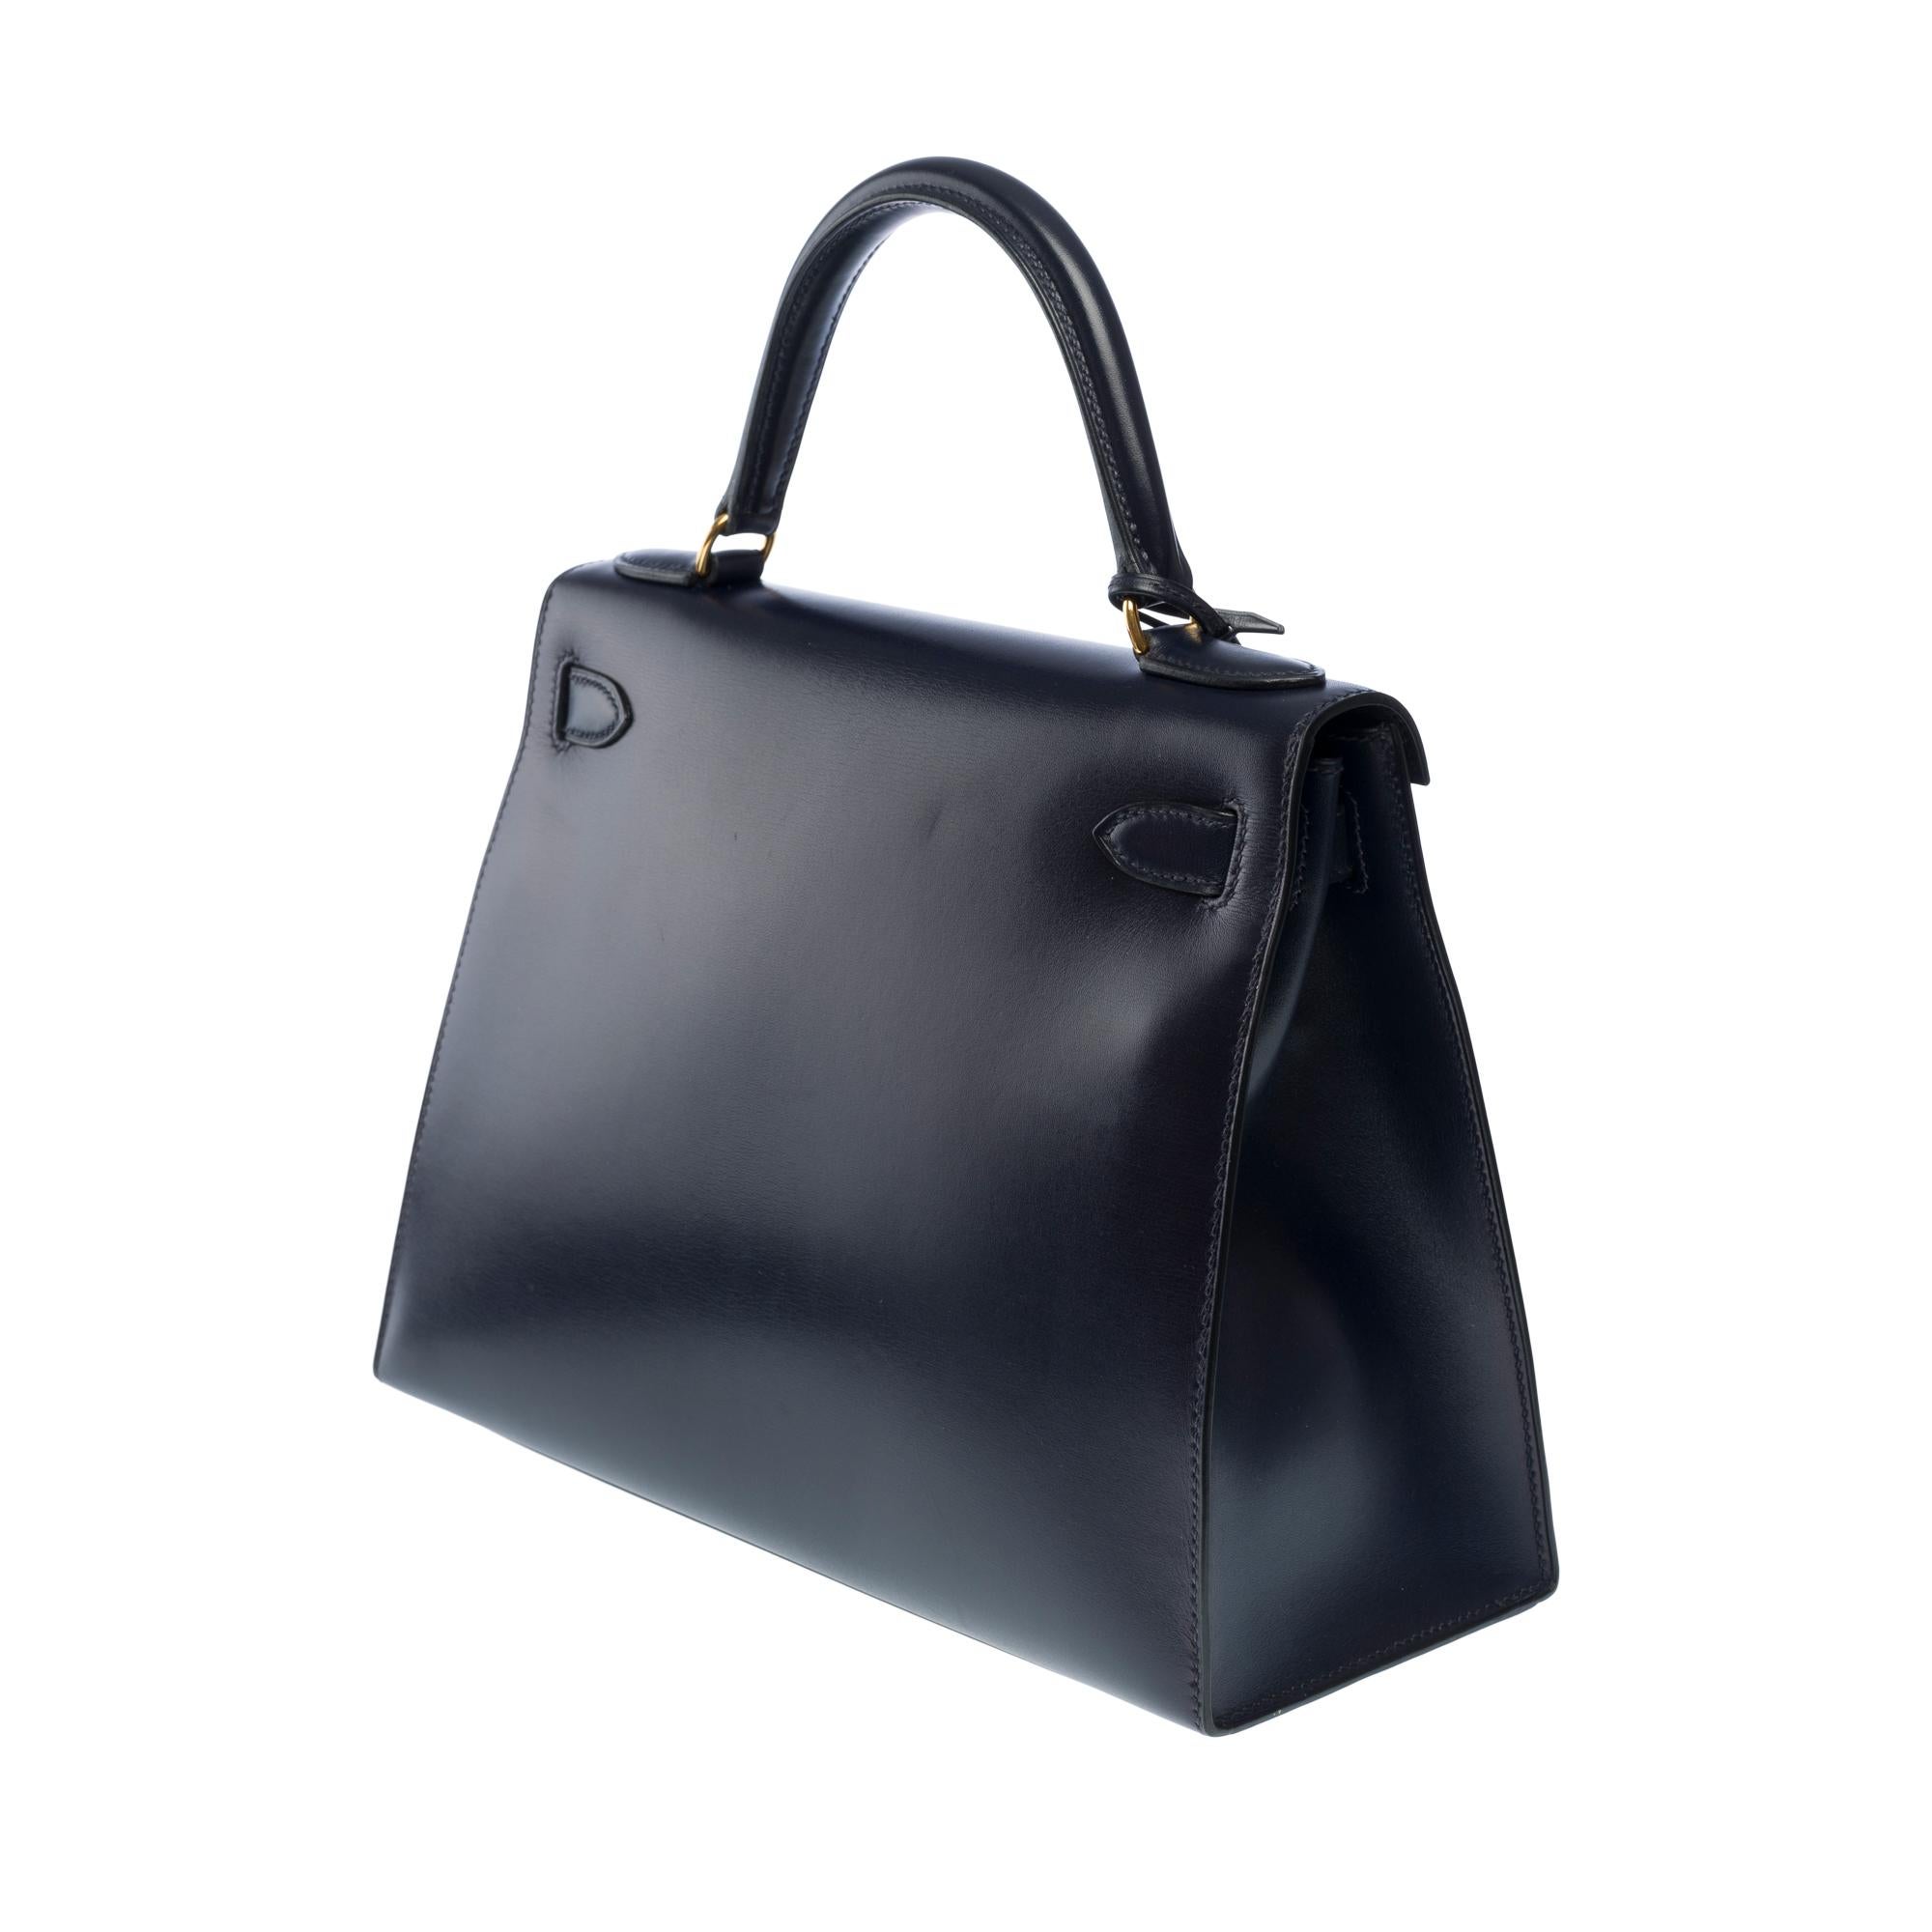 Hermes Kelly 28 sellier handbag strap in Navy Blue box calfskin leather, GHW For Sale 1